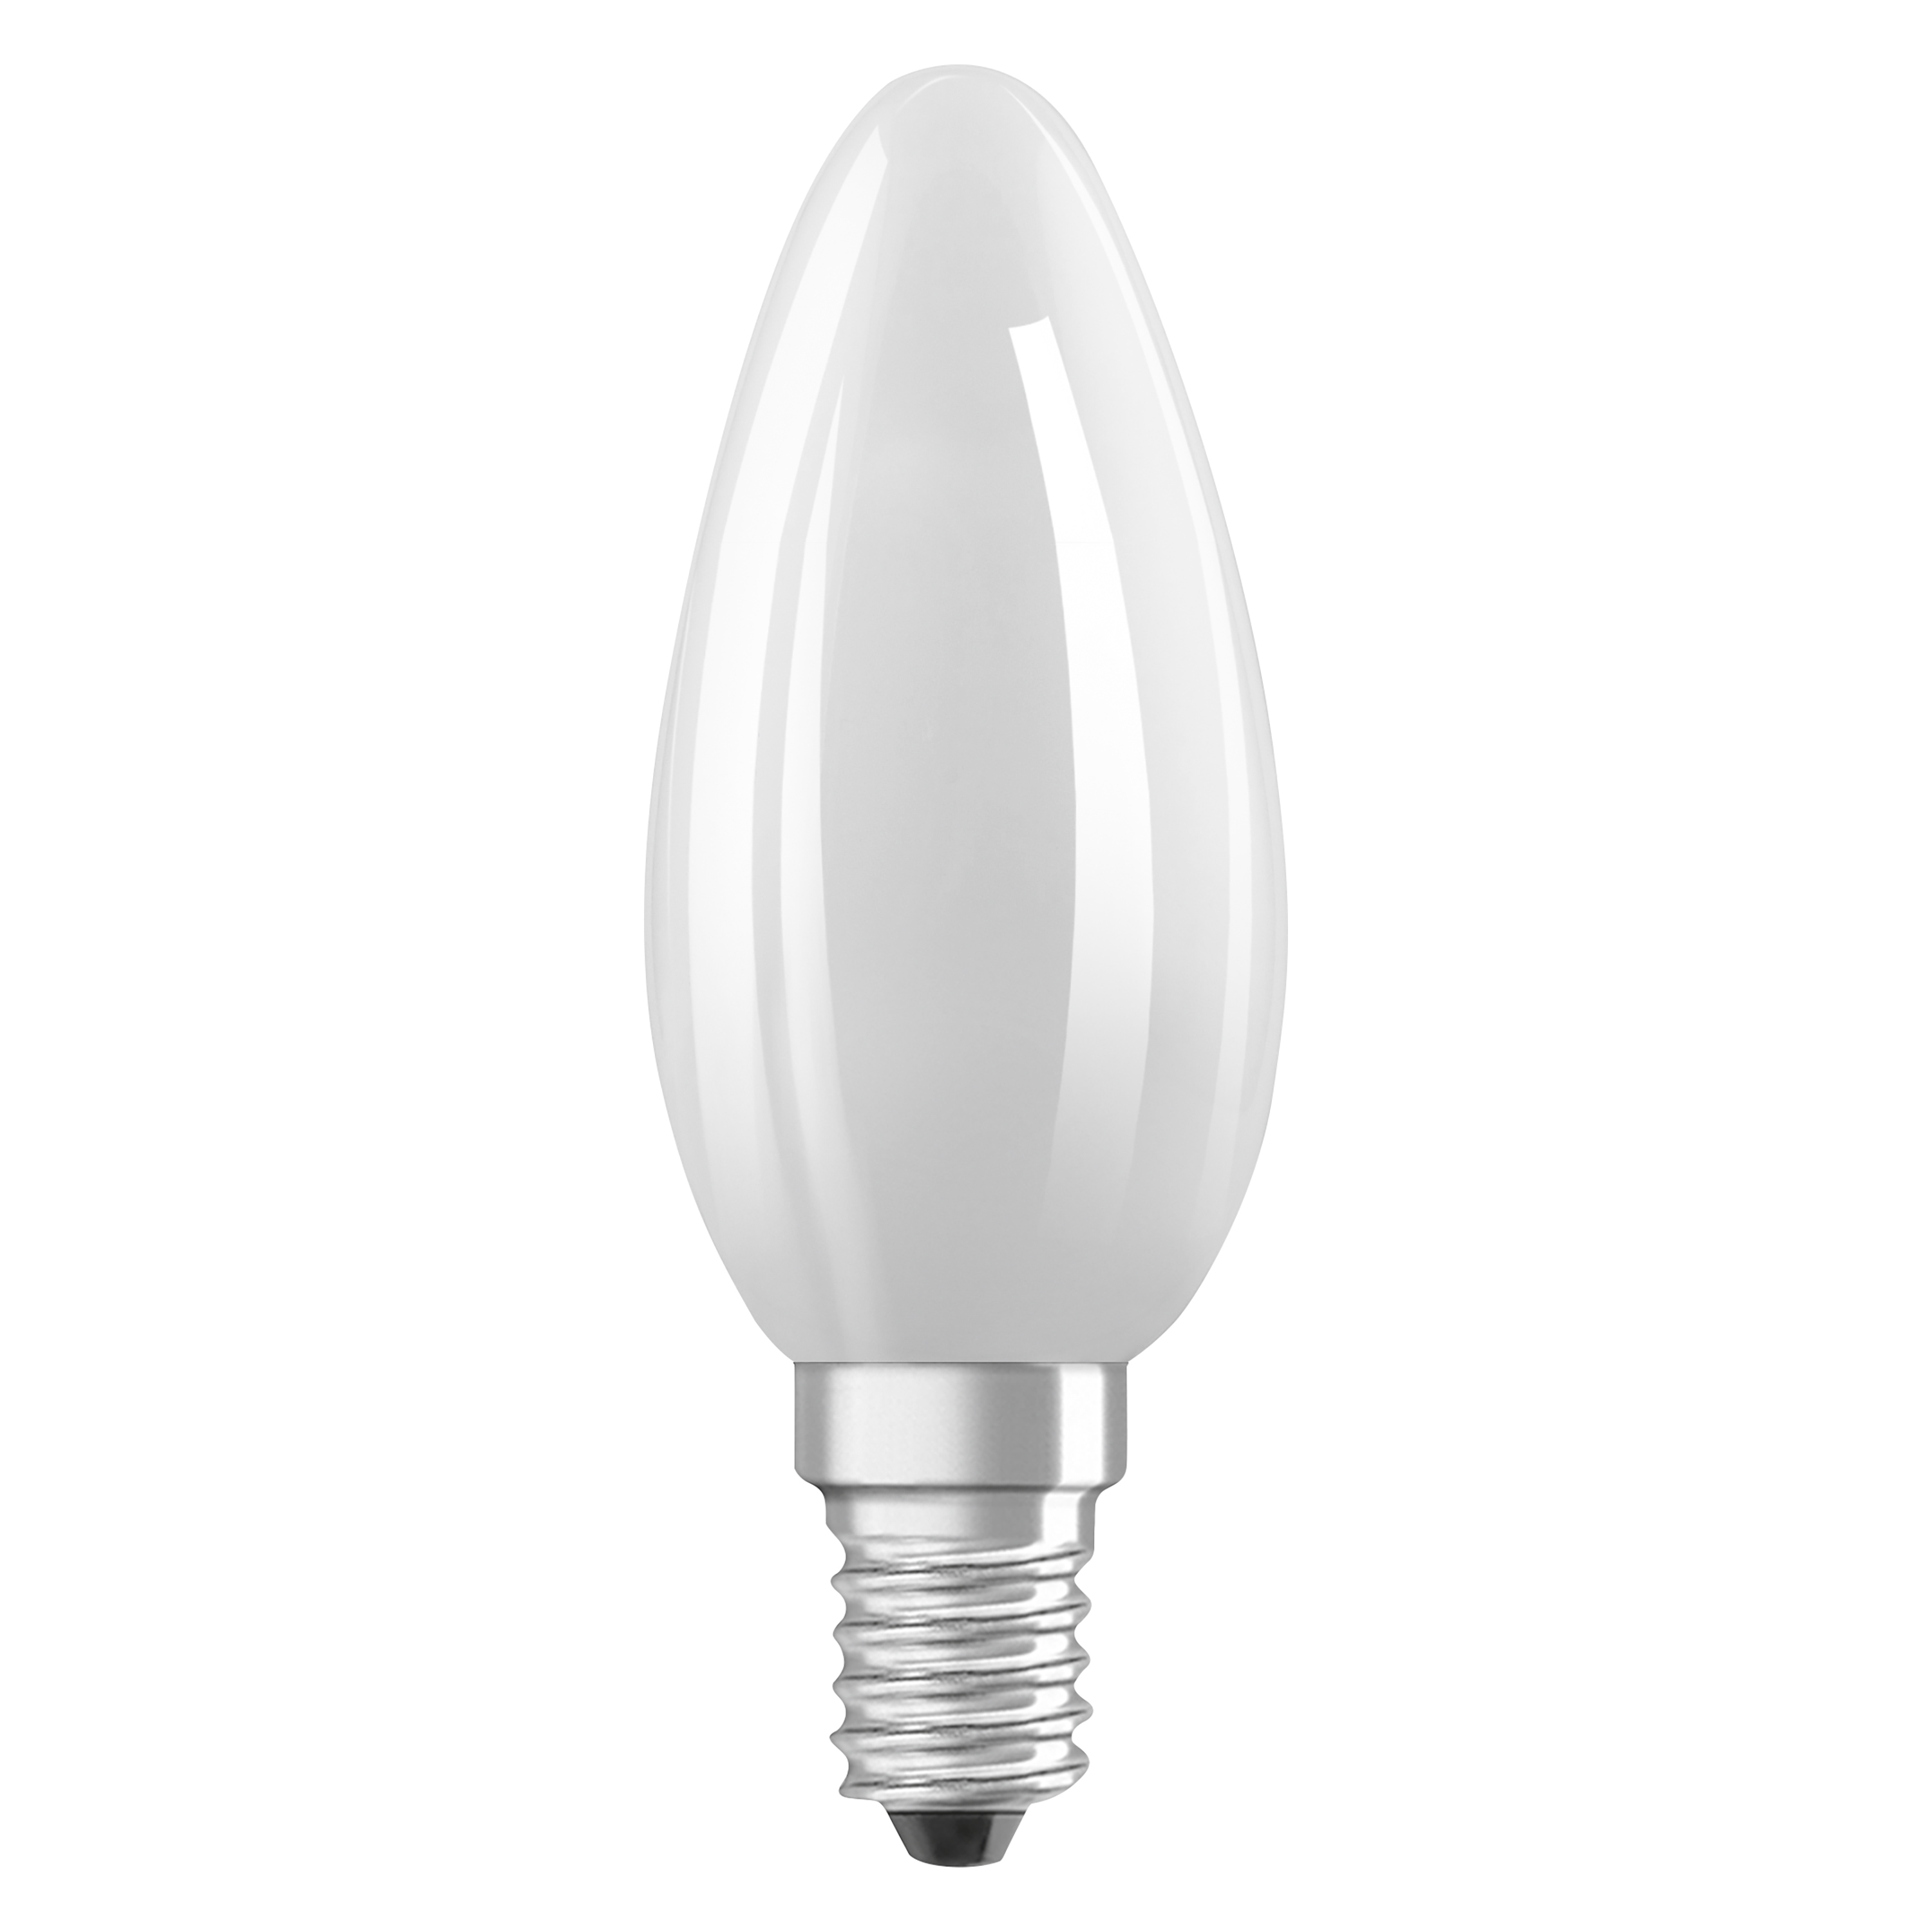 OSRAM  LED Retrofit CLASSIC Lumen 806 Warmweiß Lampe B LED